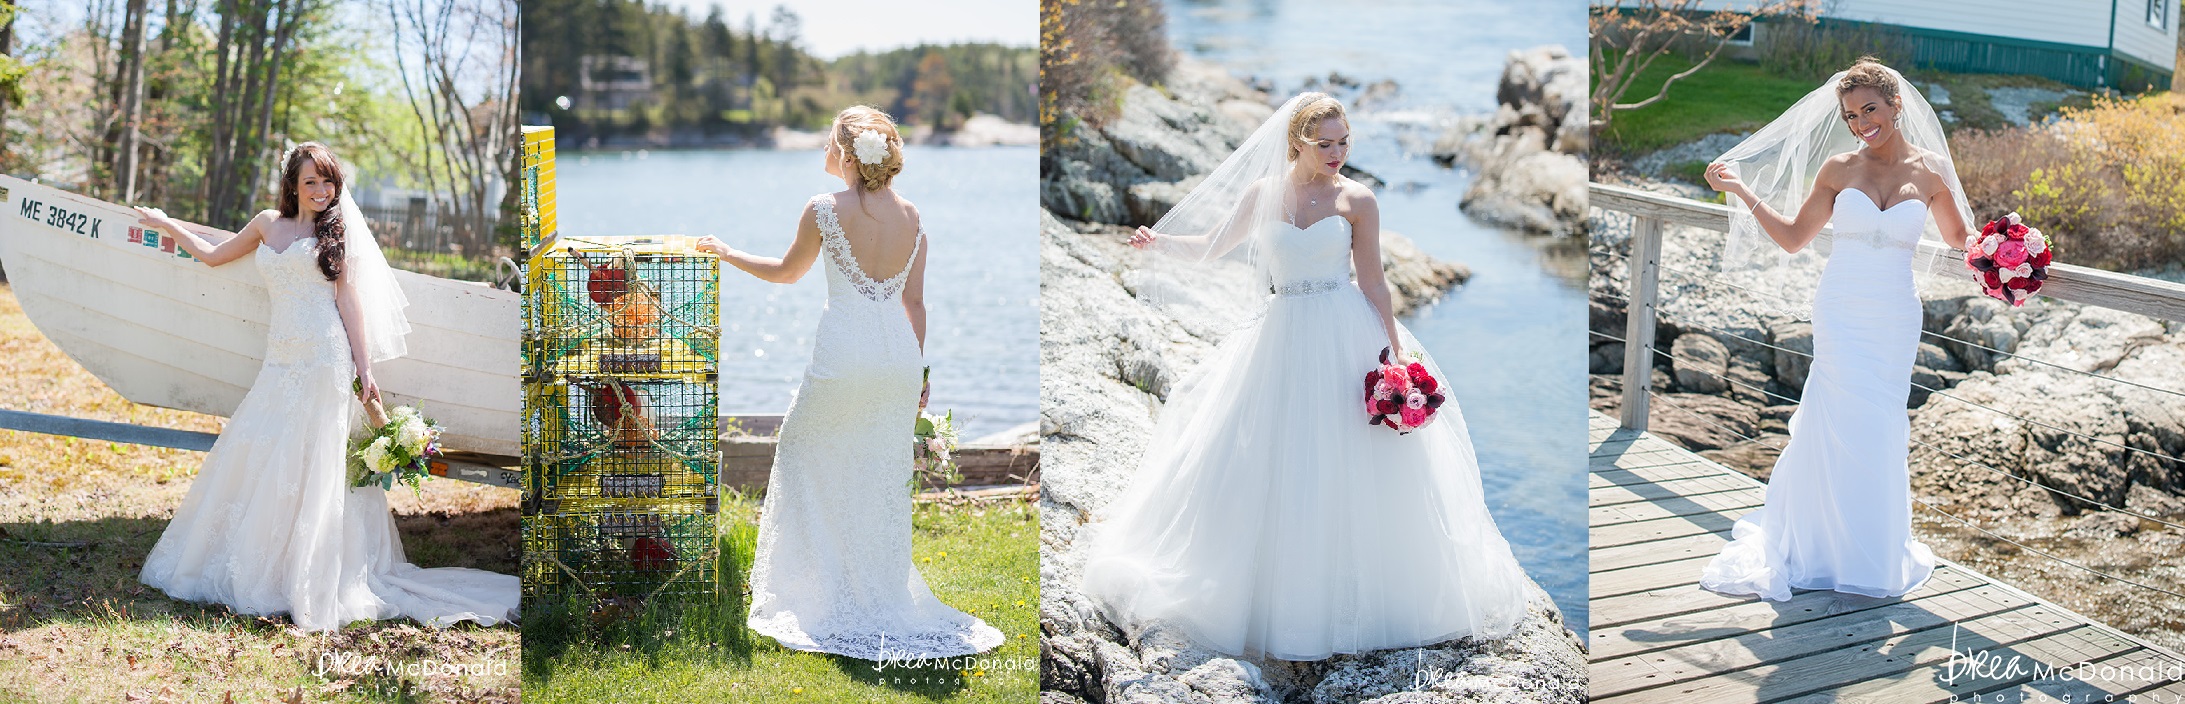 Maine Coast Weddings Special Events